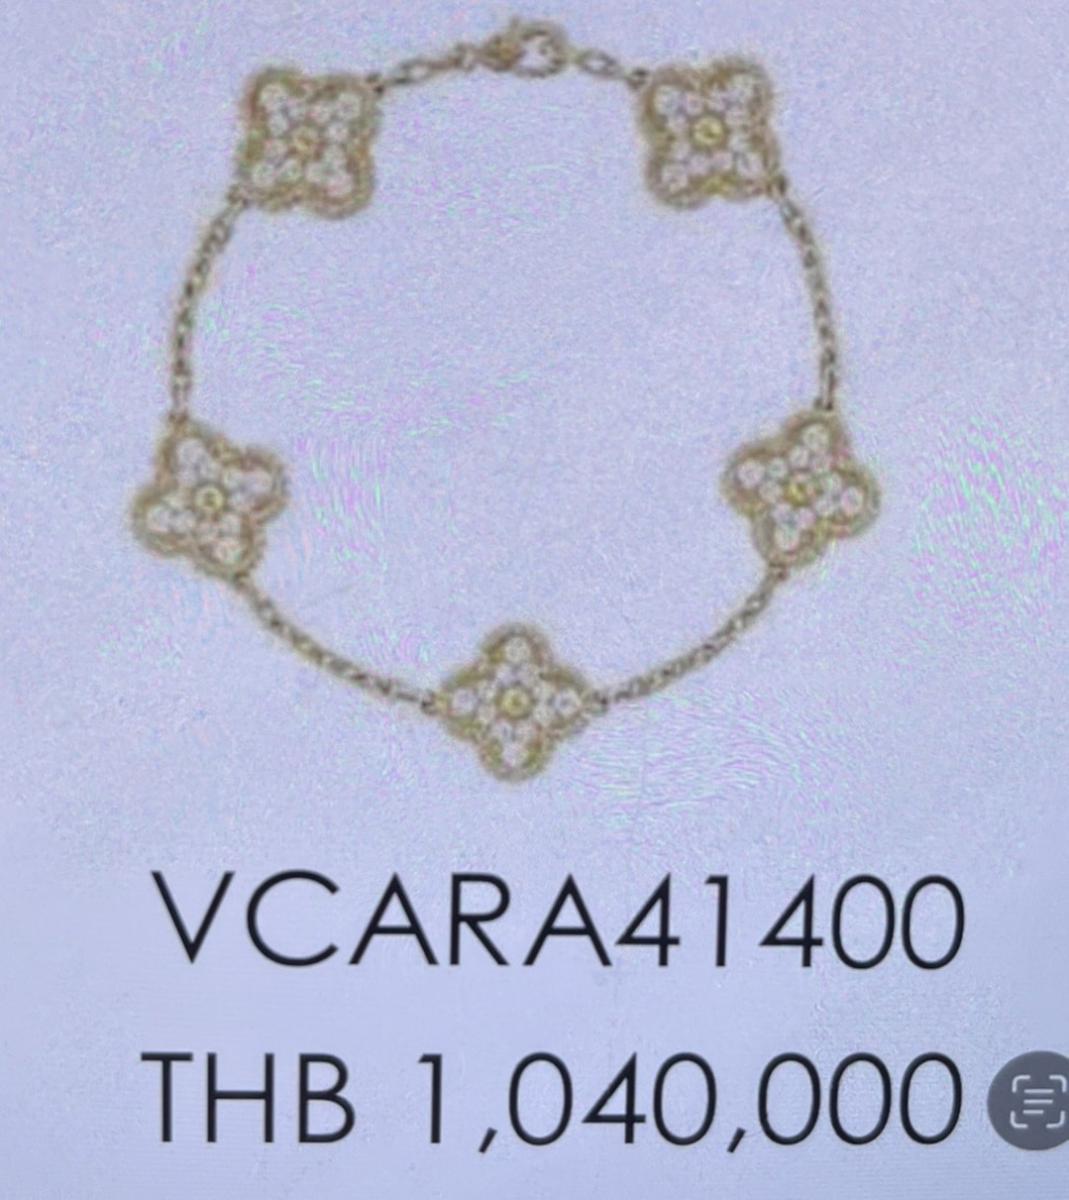 couple from china steals S$38K diamond bracelet